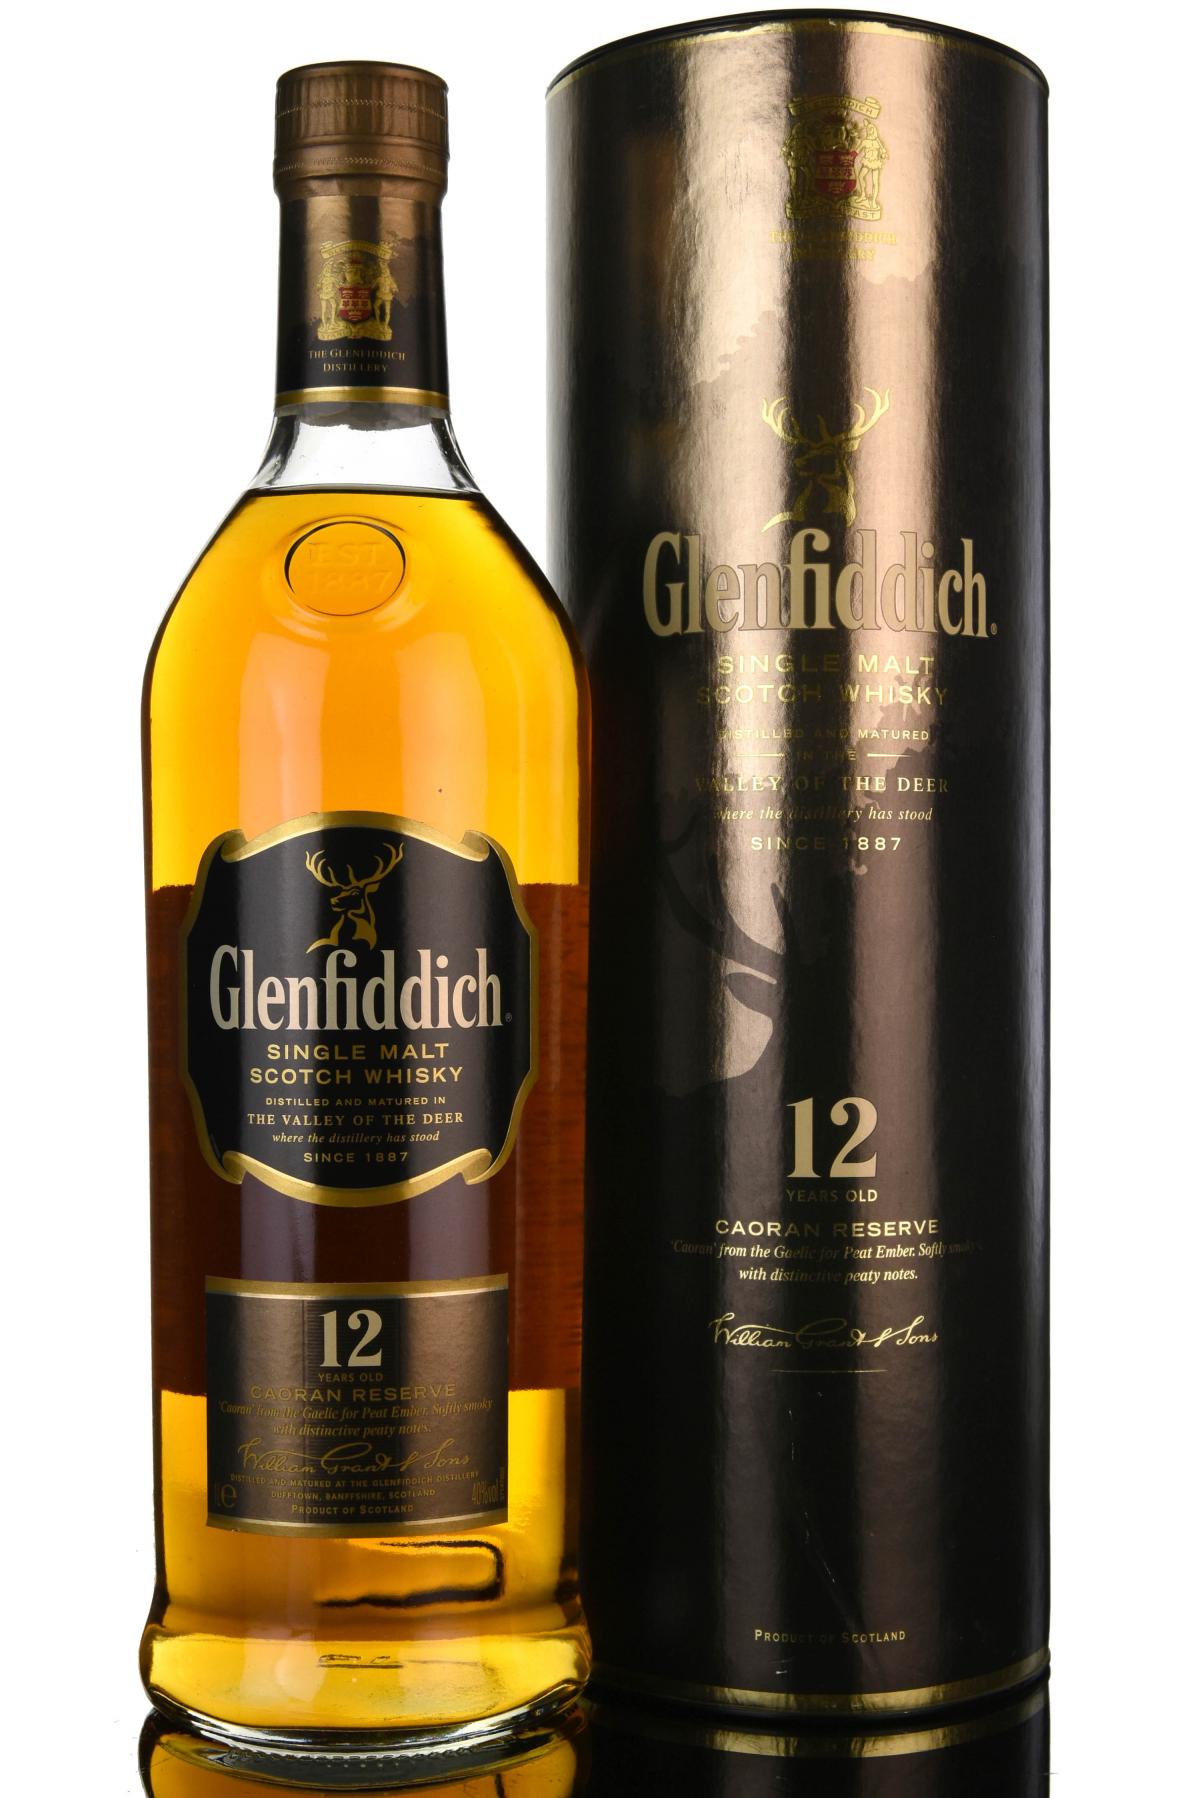 Glenfiddich 12 Year Old - Caoran Reserve - 1 Litre